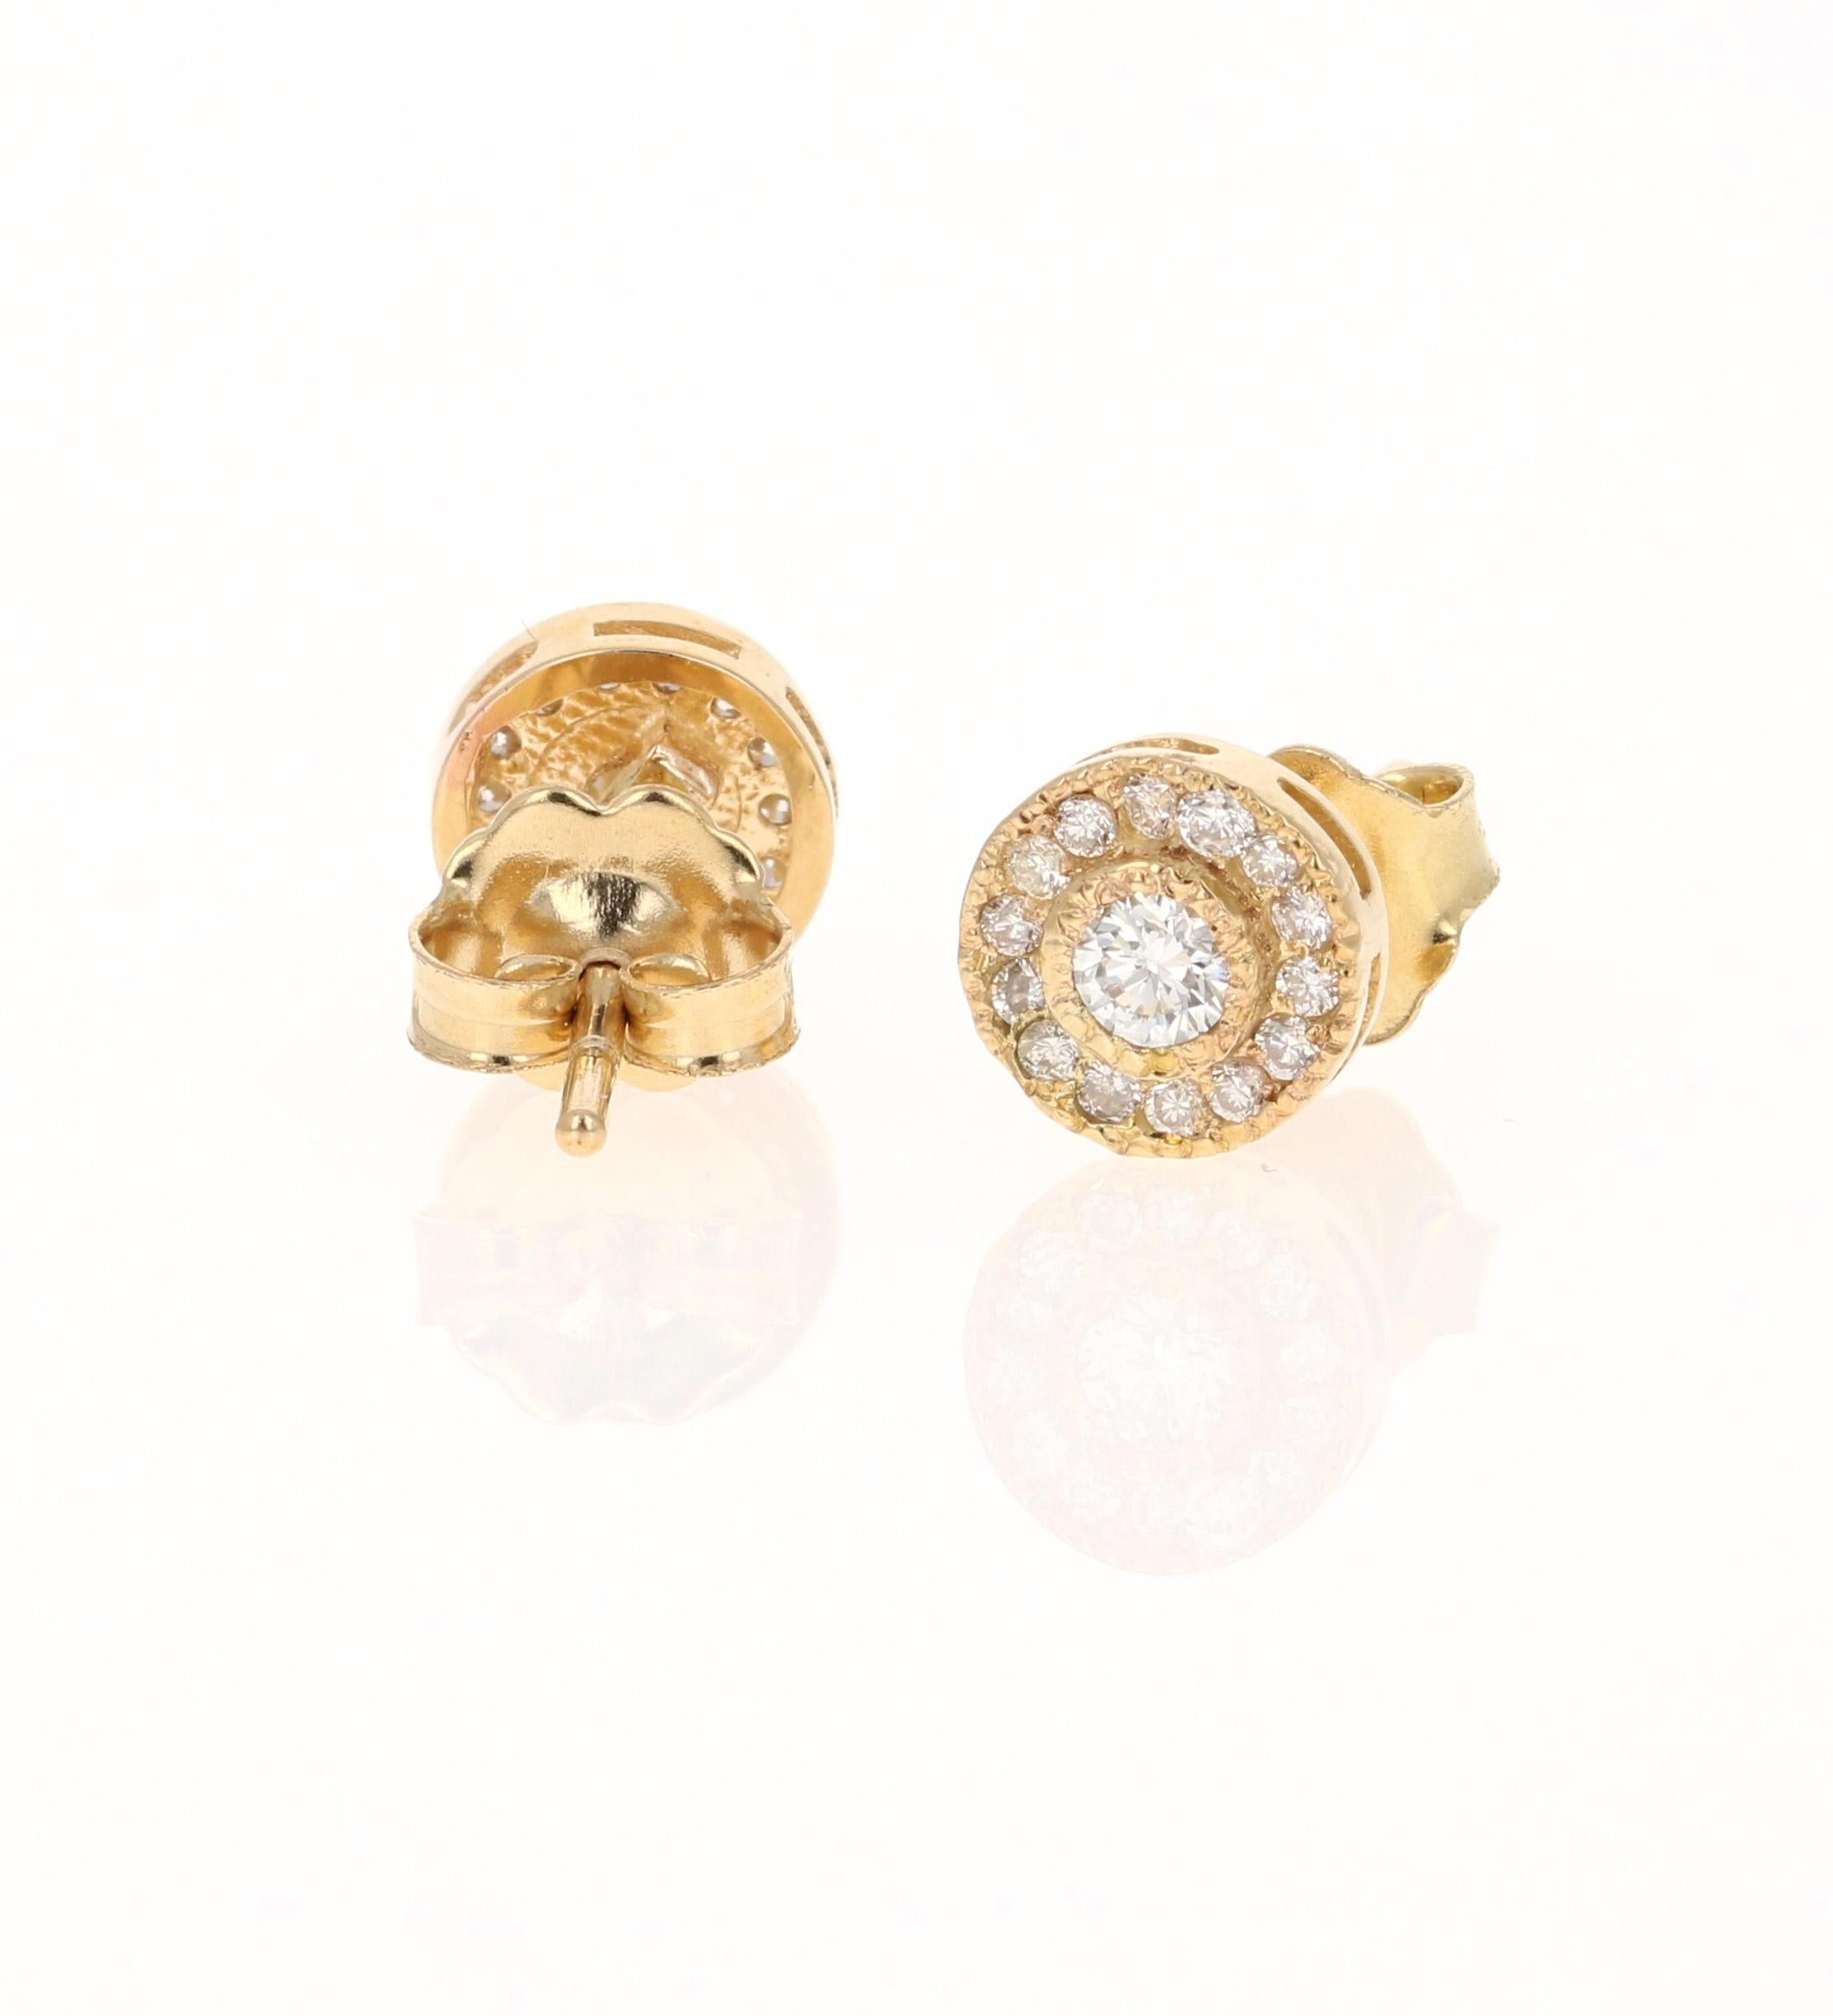 0.30 carat diamond earrings